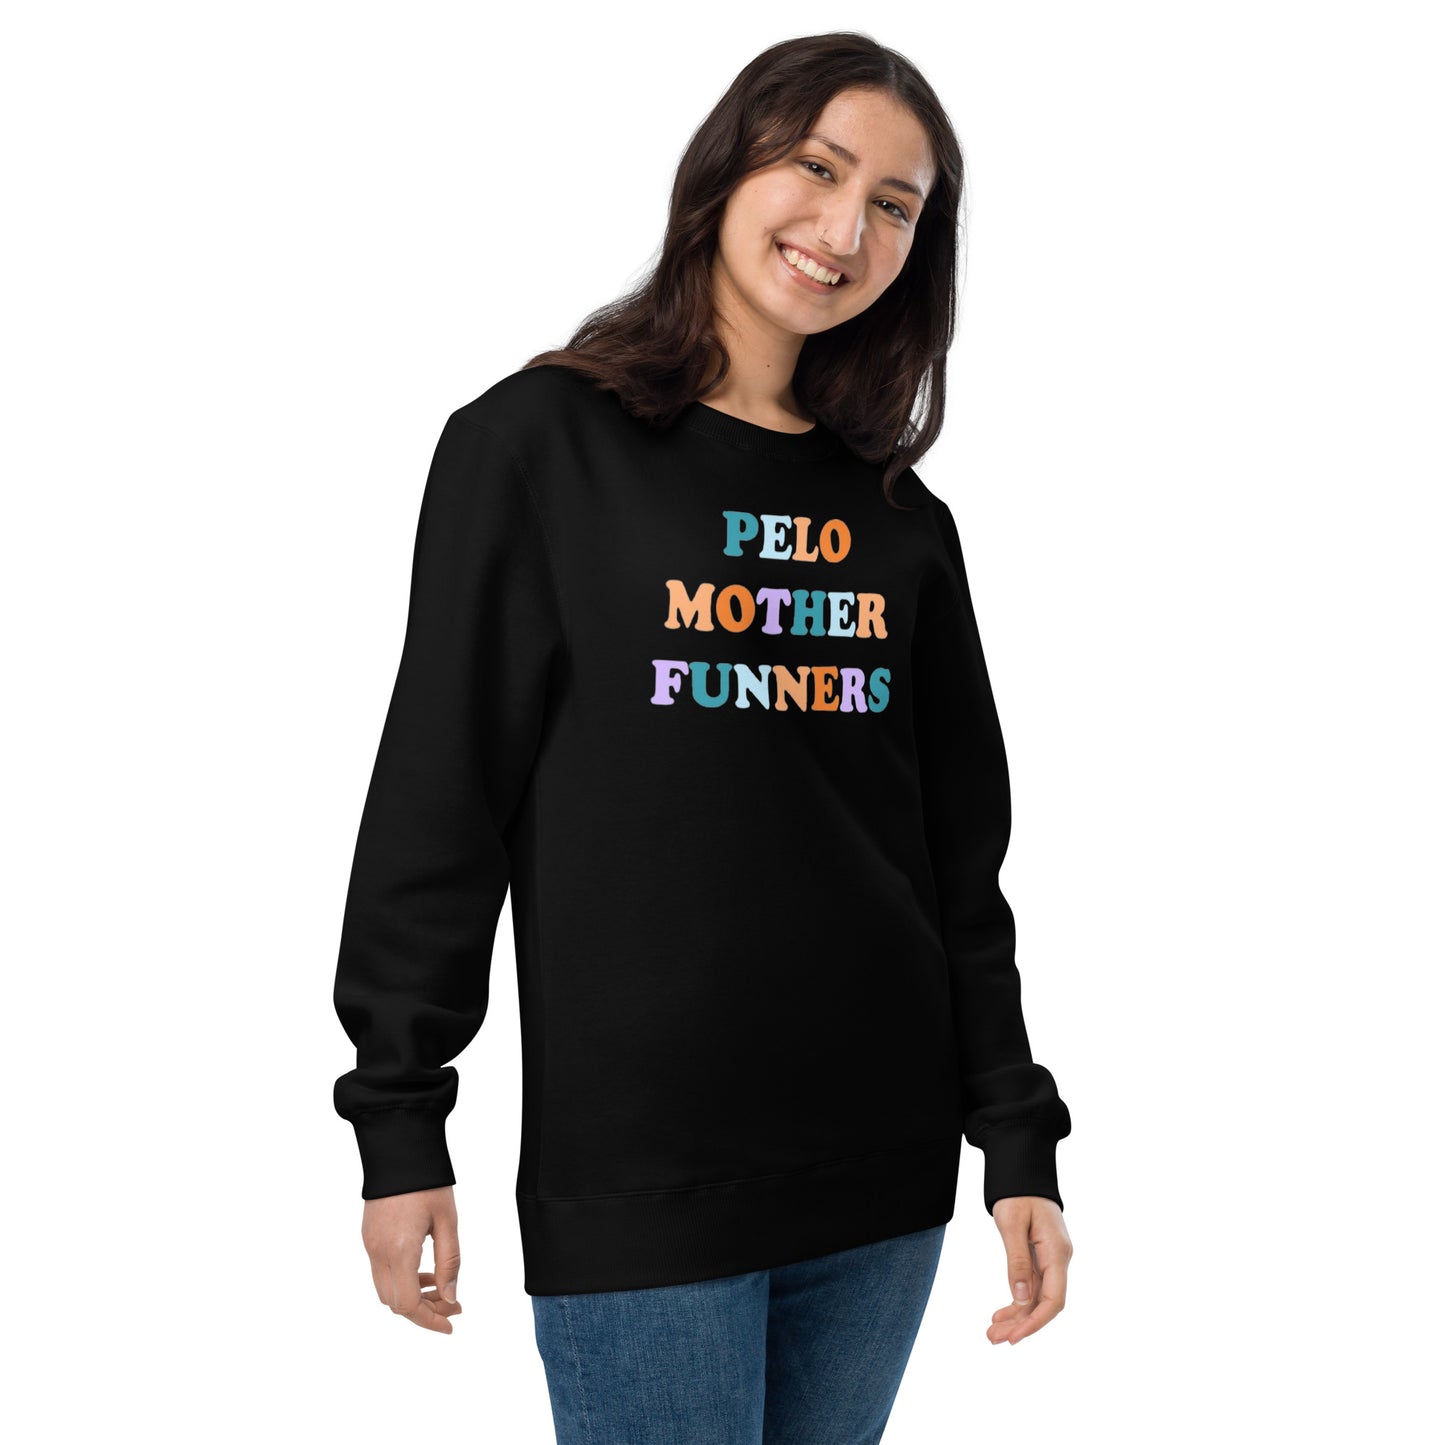 Pelo Mother Funners - Unisex fashion sweatshirt